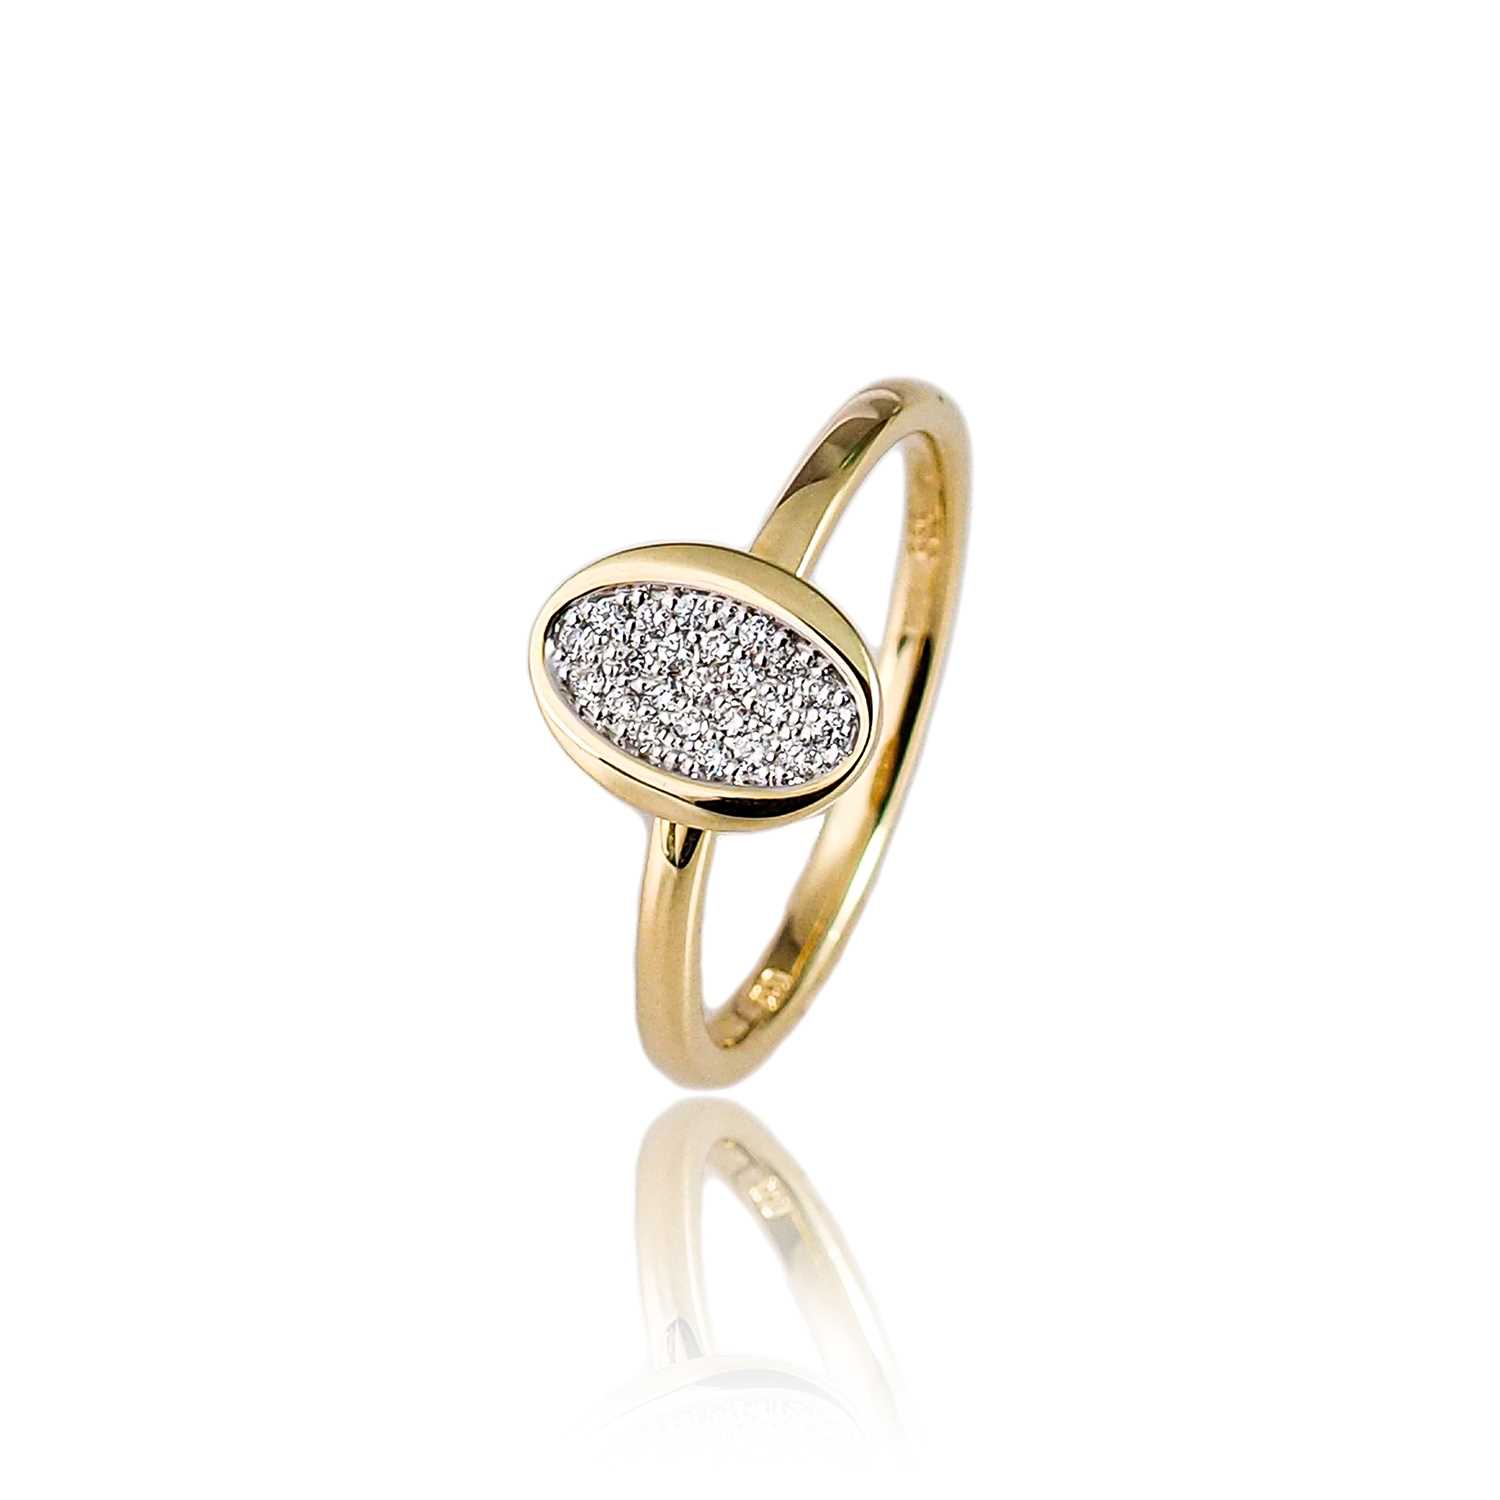 Lot 530 - 18K Gold Diamond Ring